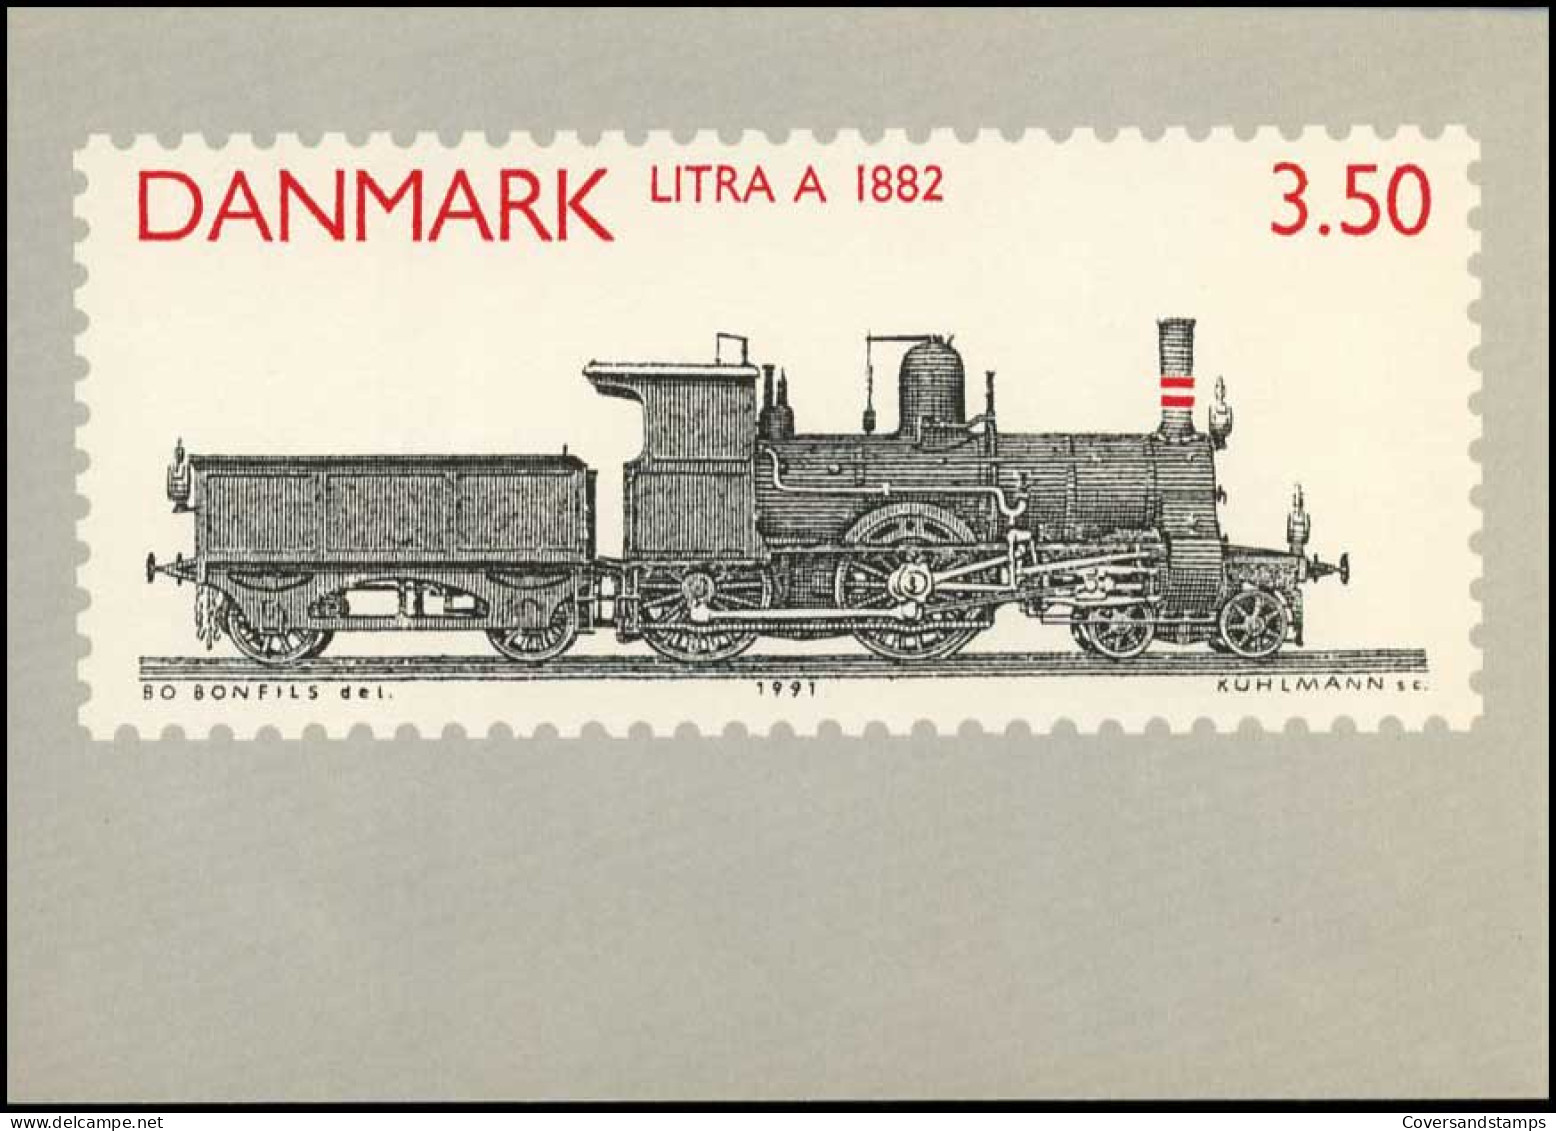  Denemarken - Trein - Postal Stationery